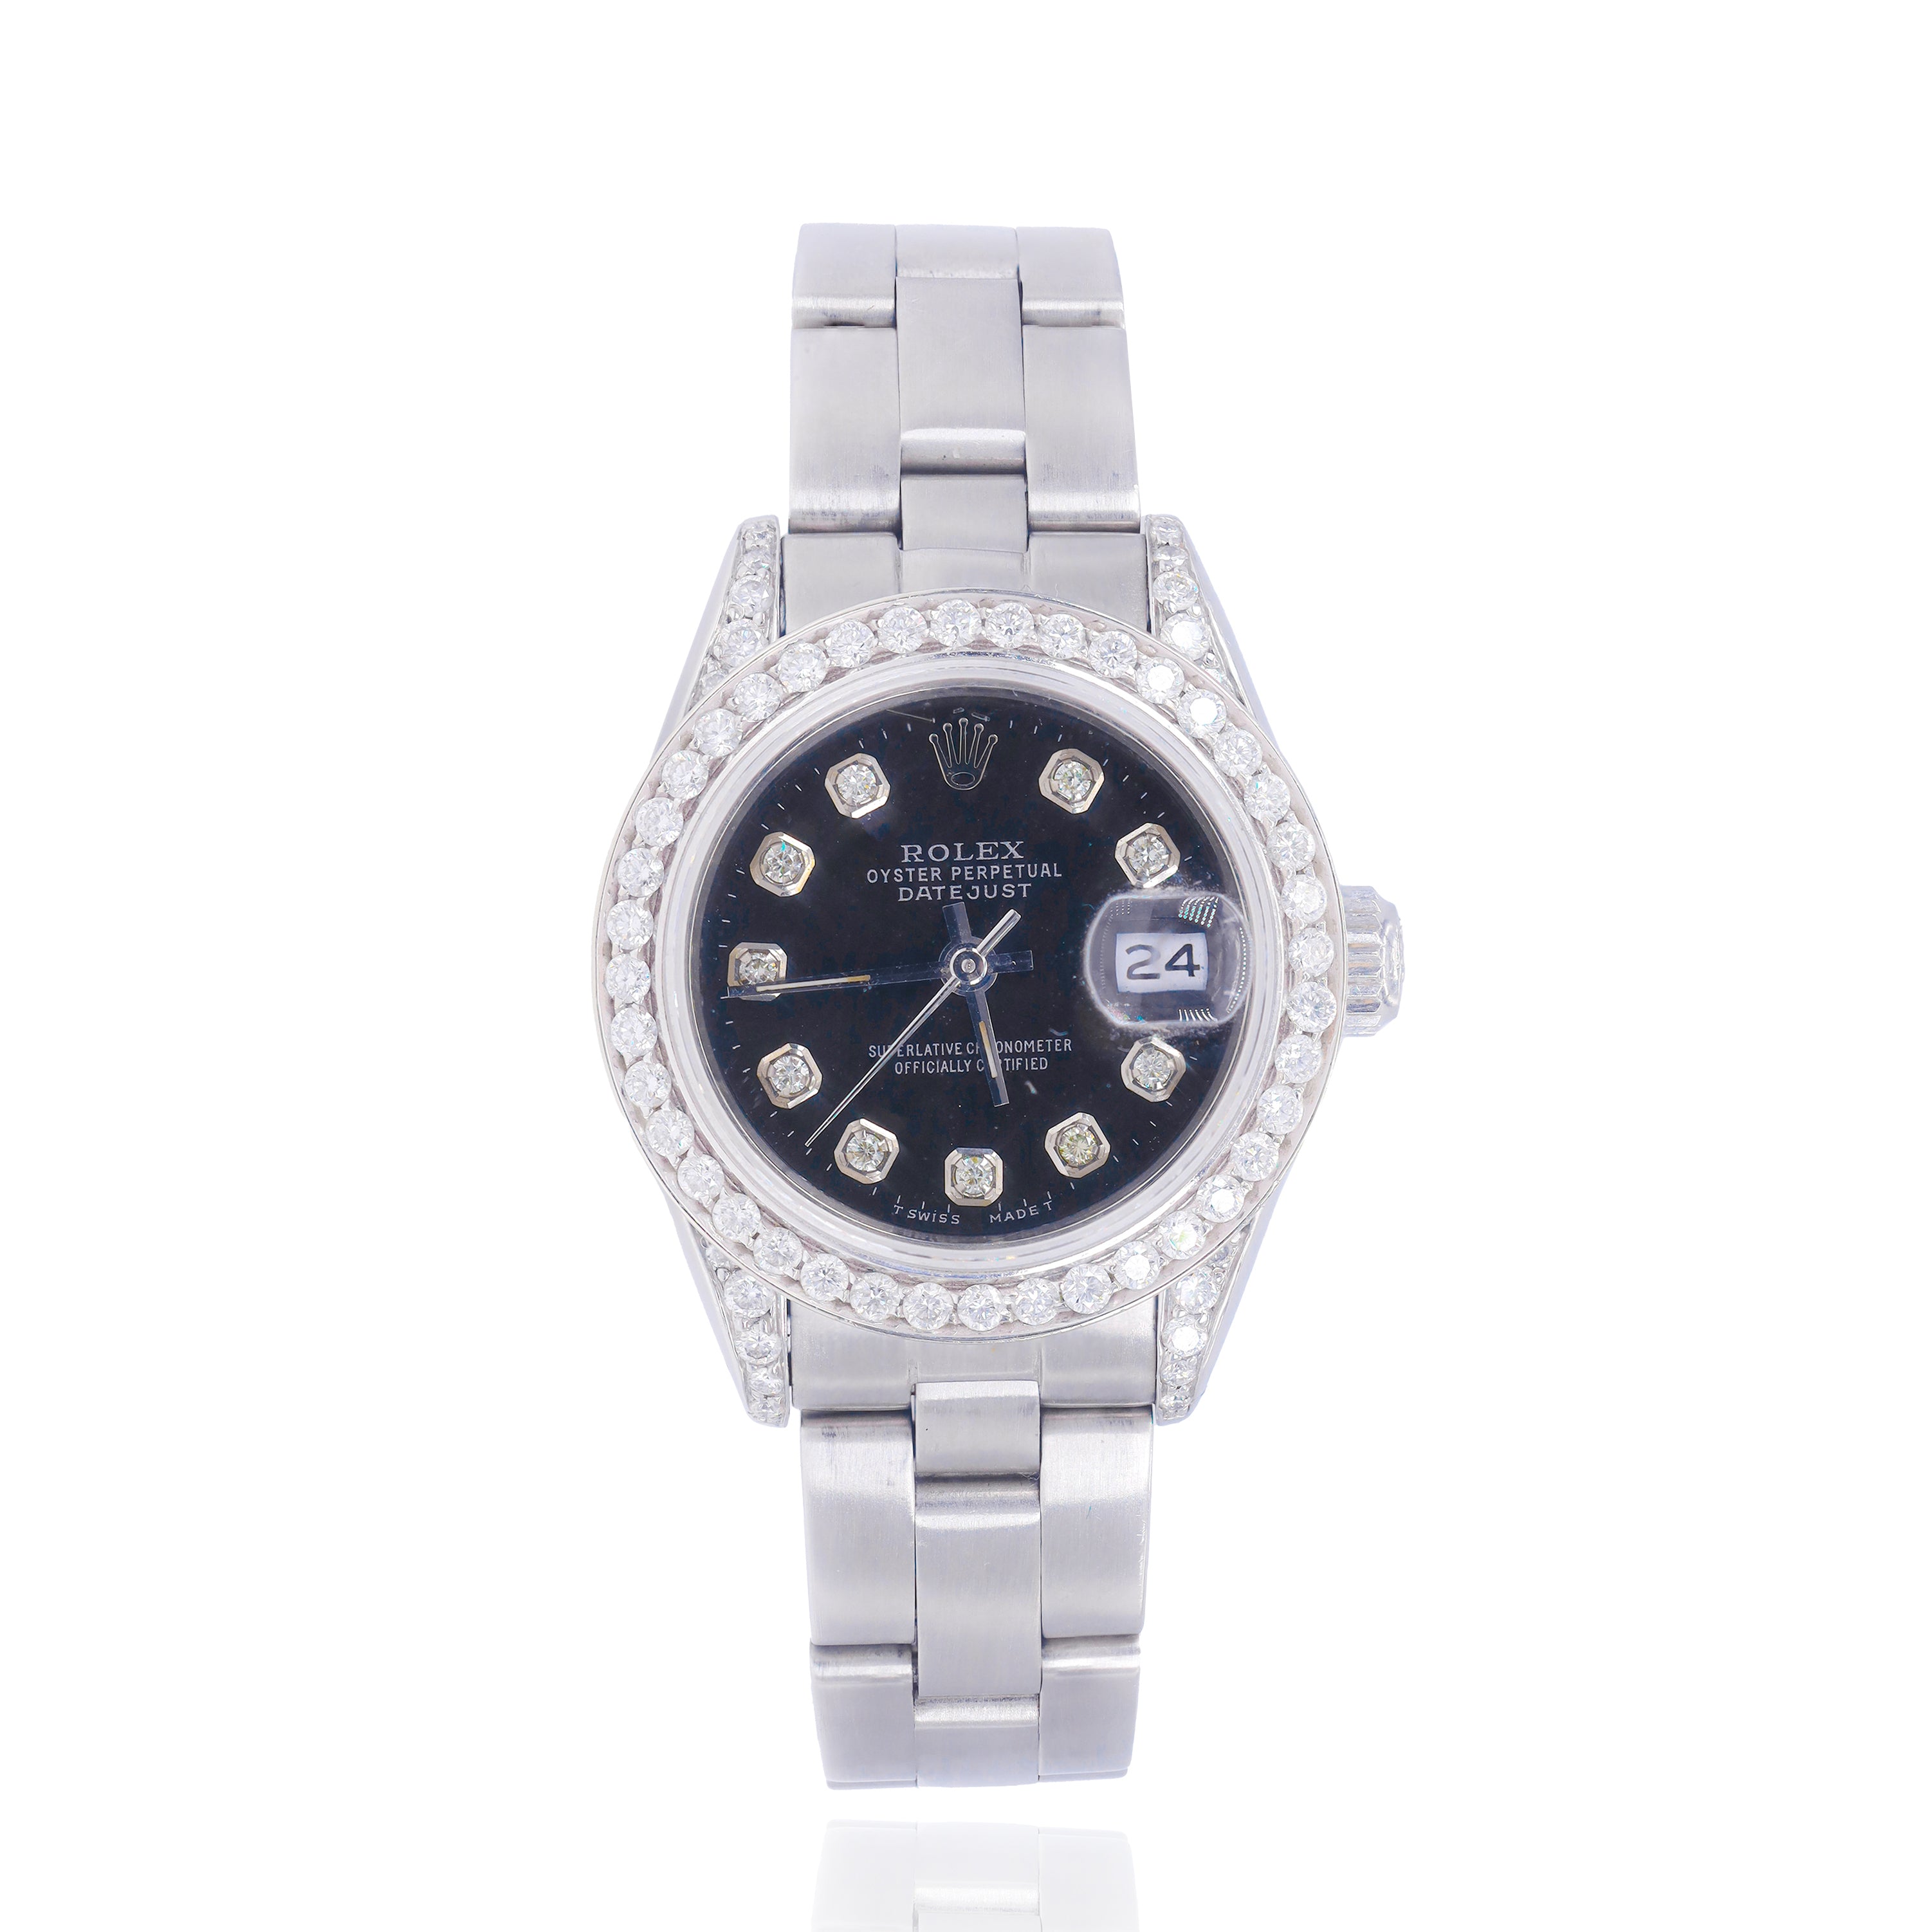 Rolex 69000 Lady-Datejust 26mm Black Factory Diamond Dial